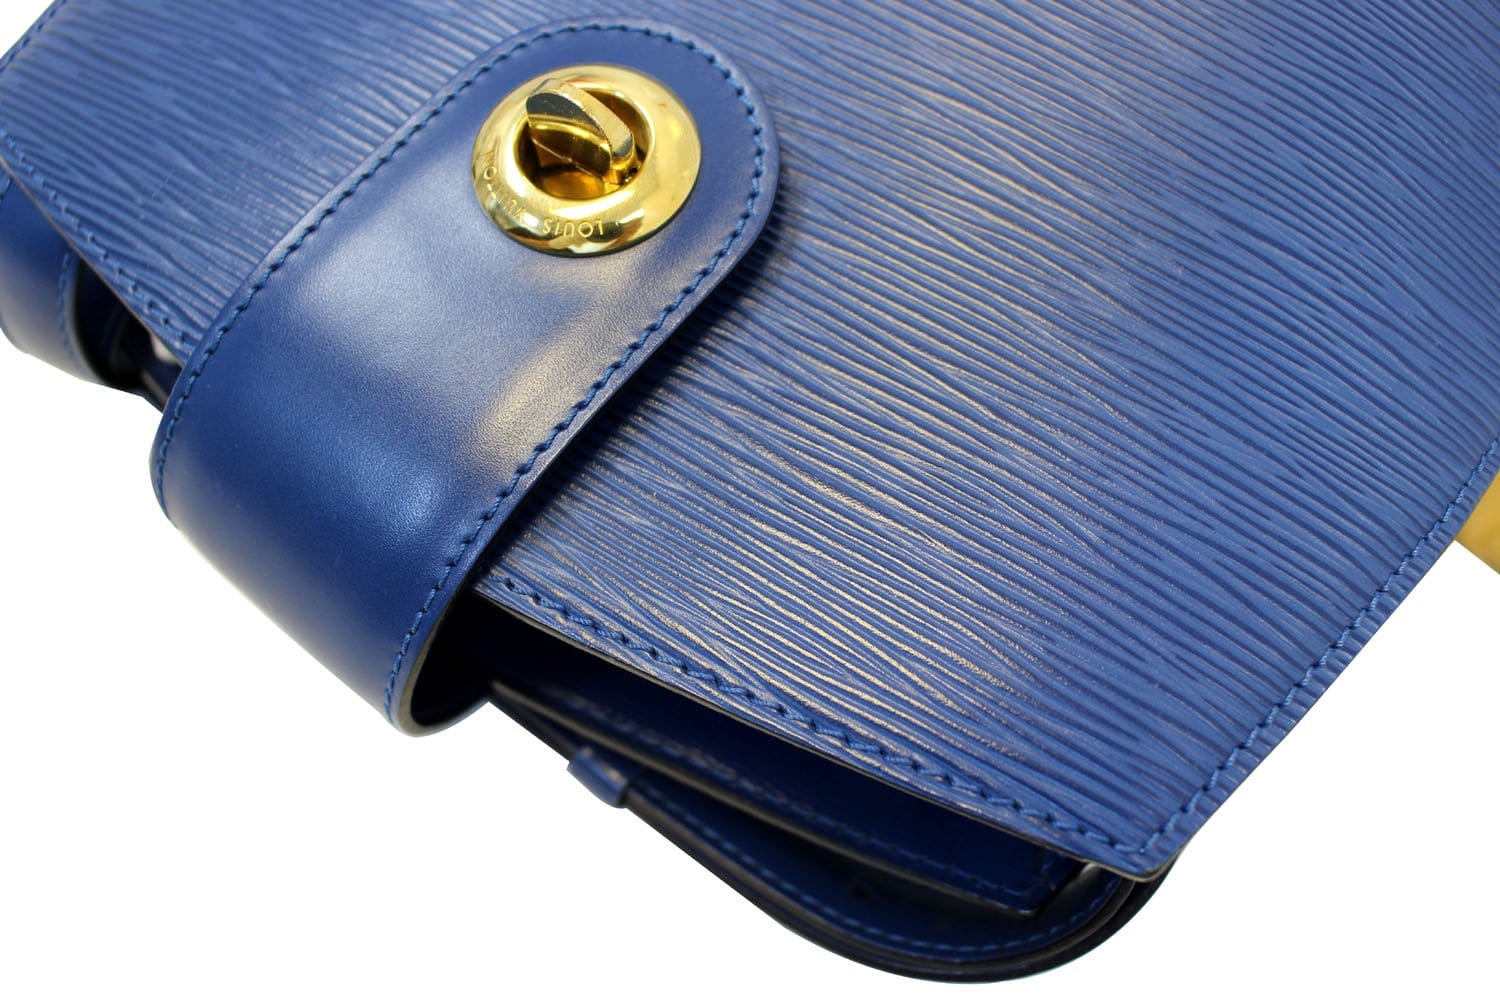 Louis Vuitton Red Epi Leather Cluny Bucket Bag – Designer Goods Resale